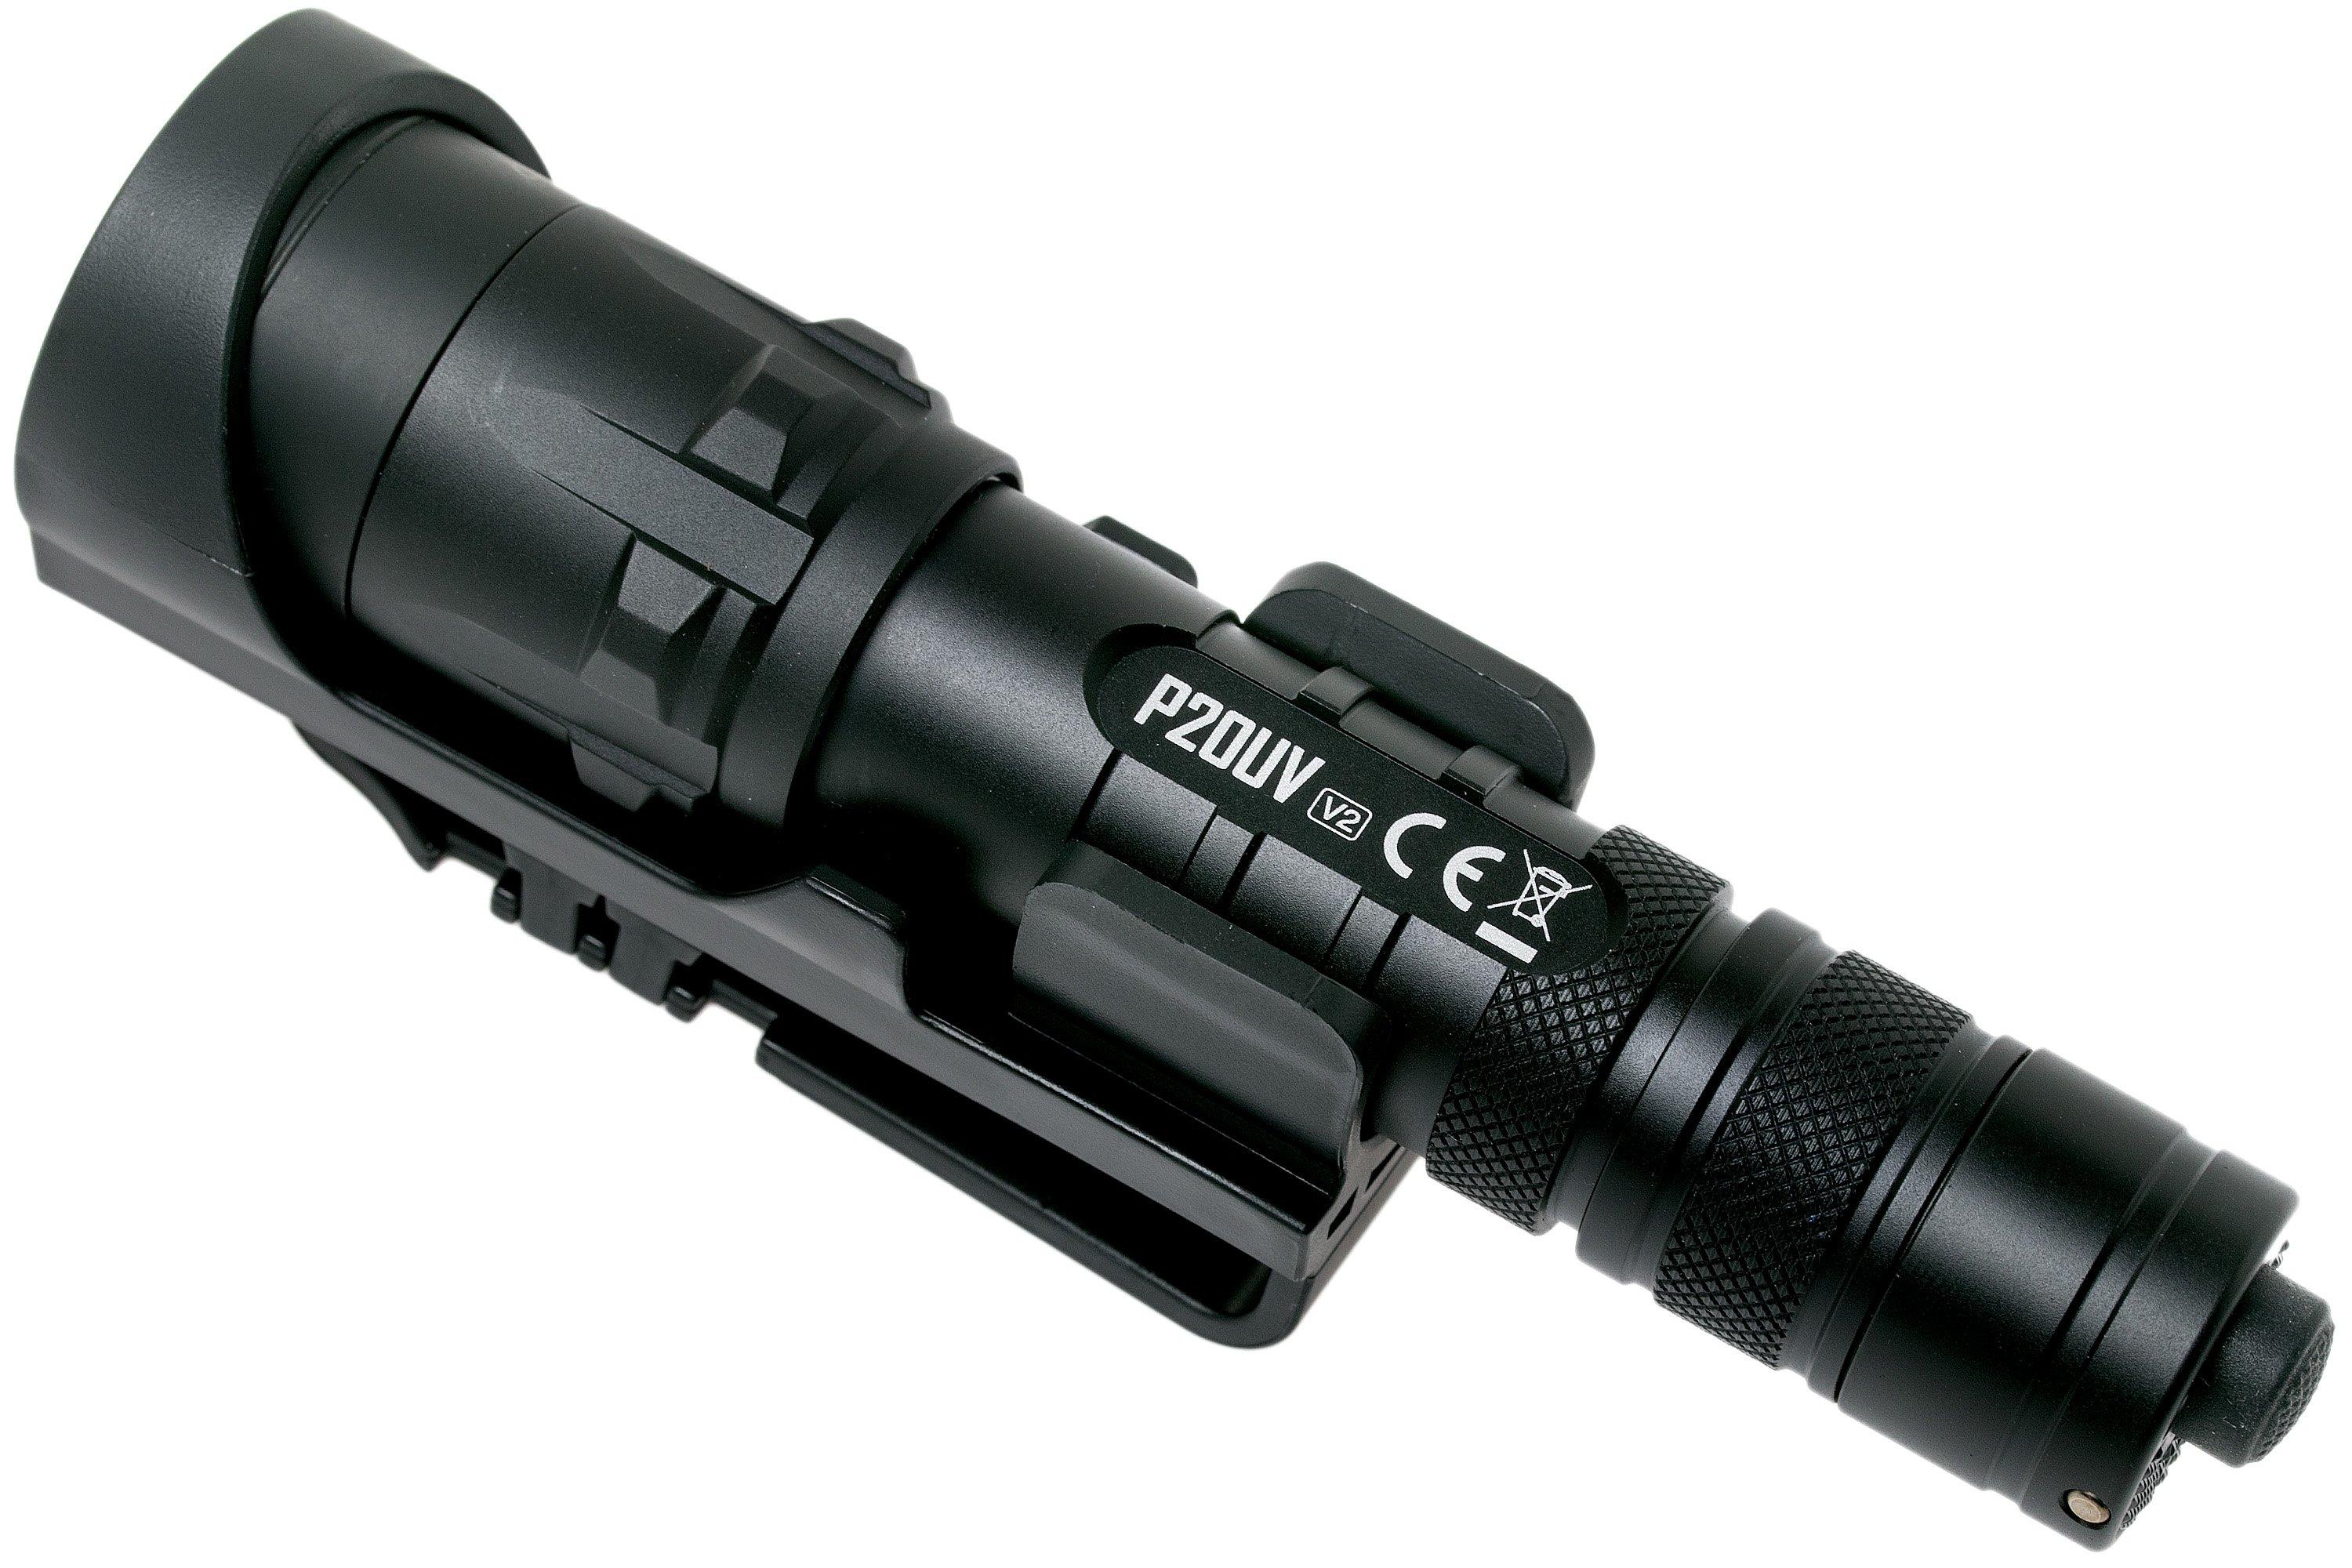 Nitecore P20UV V2 lampe de poche avec lumière UV, 1000 lumen